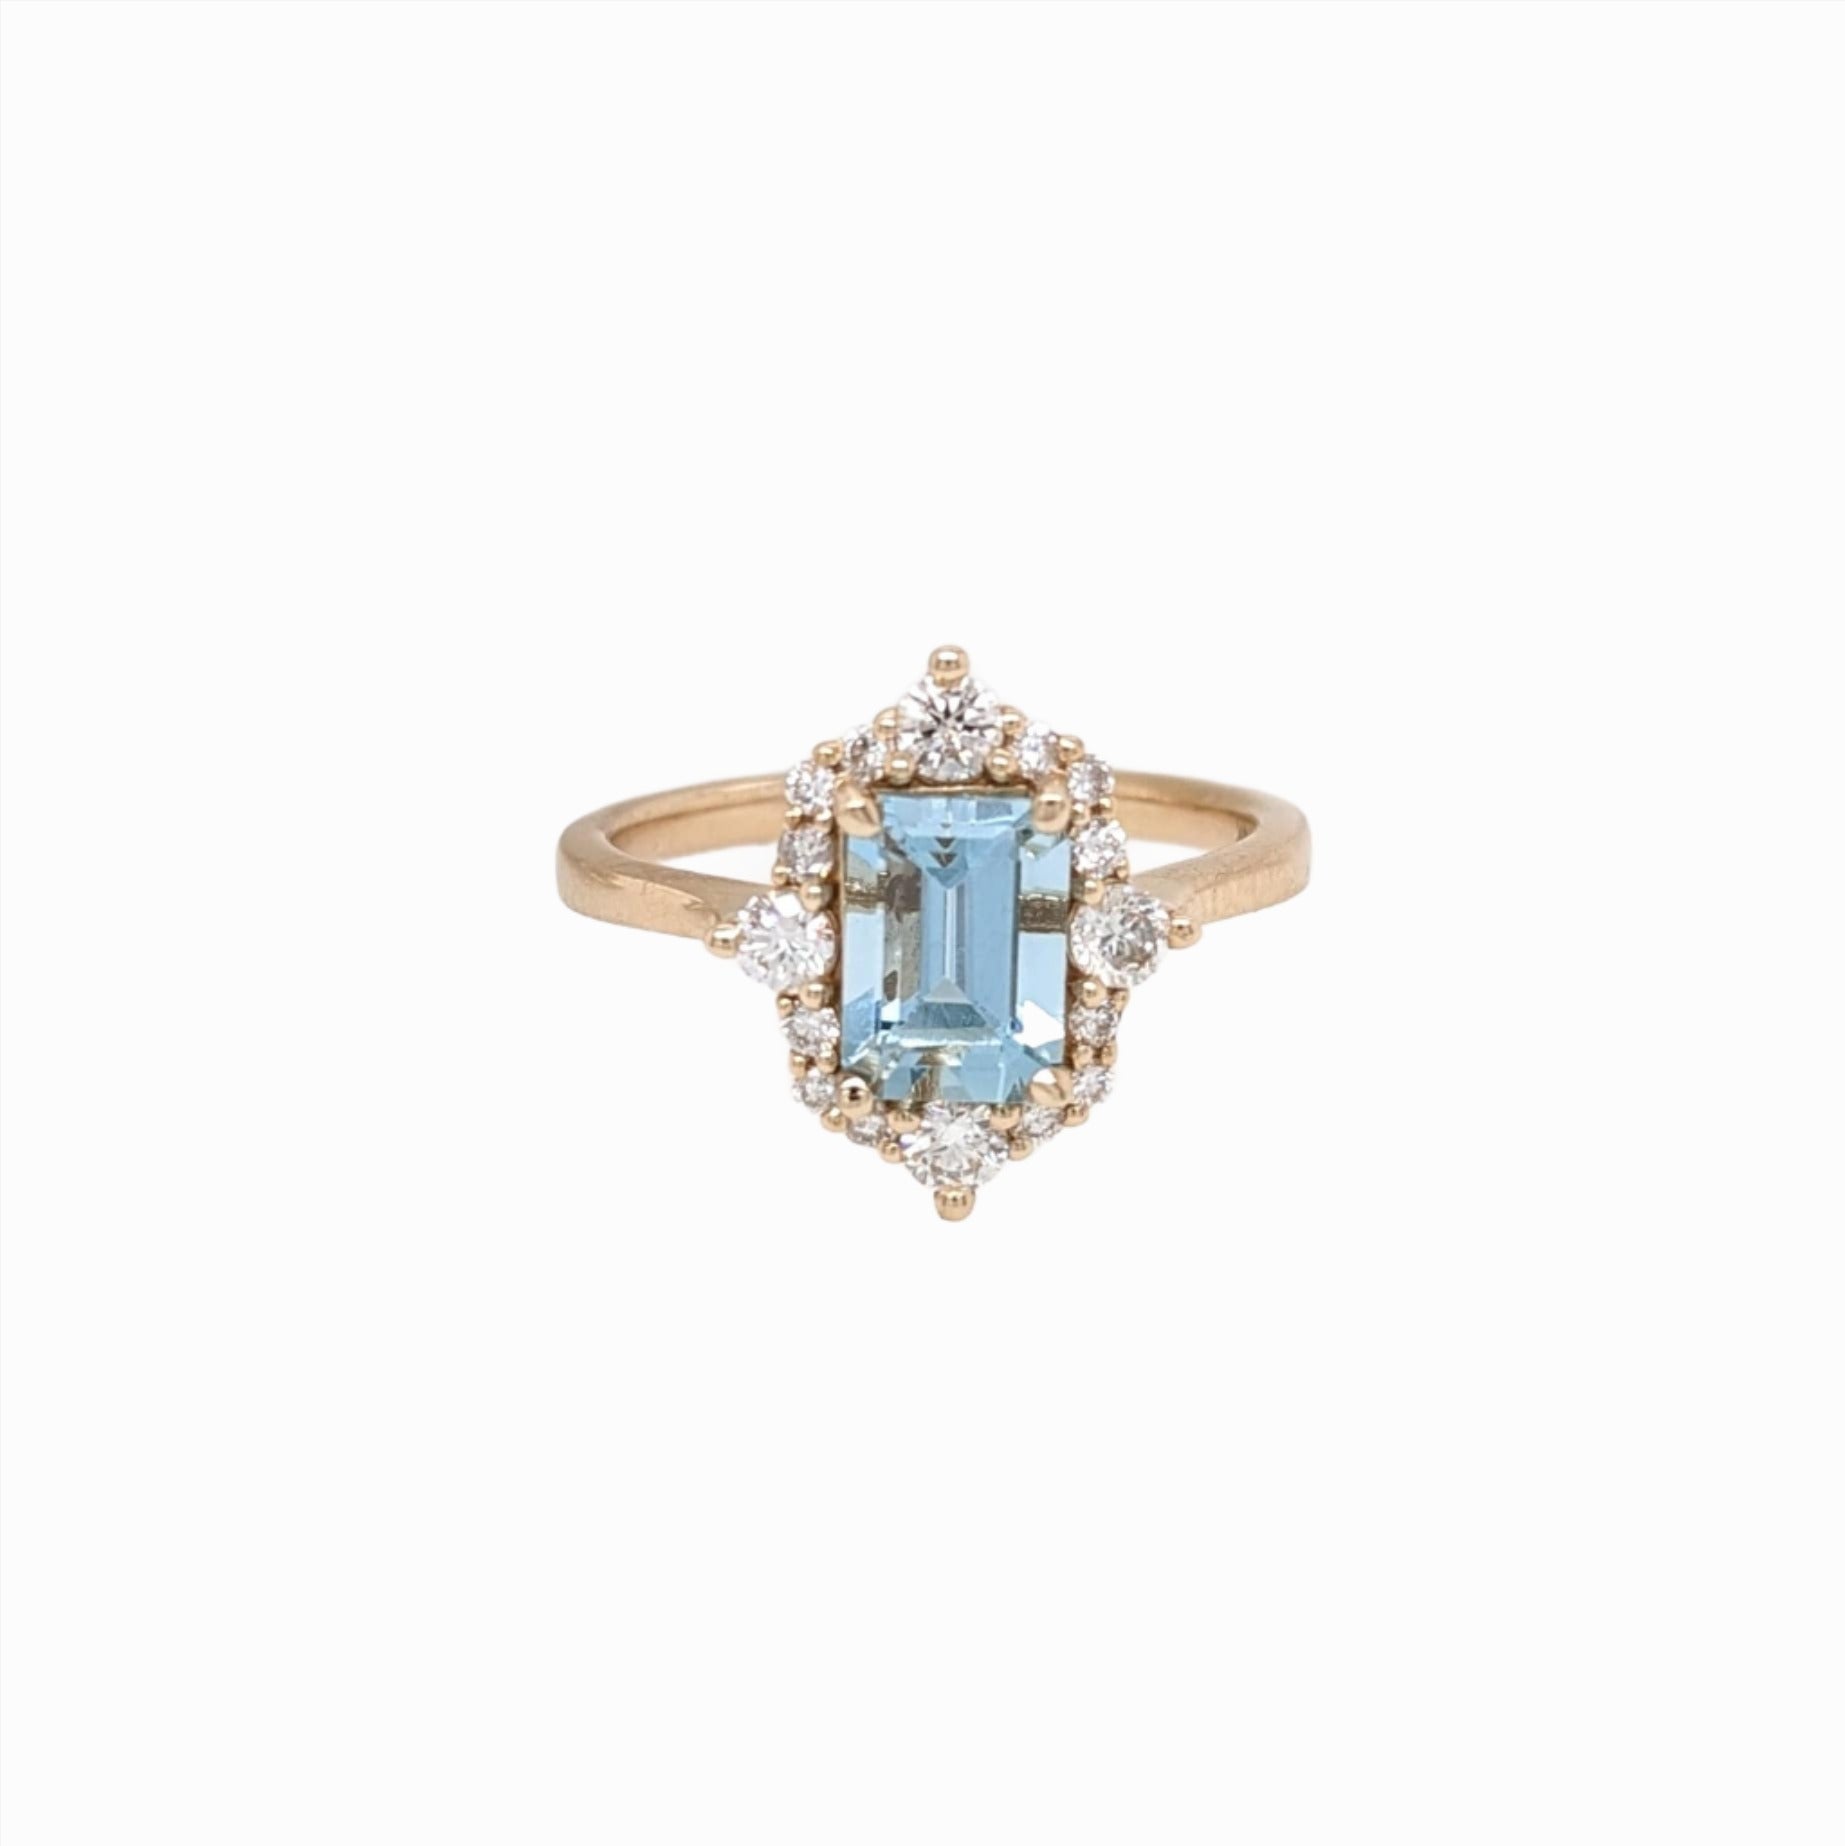 Compass Rose Aquamarine Ring in 14k Gold w a Halo of Natural Diamonds | Emerald Cut 7x5mm | March Birthstone | Light Blue Gemstone